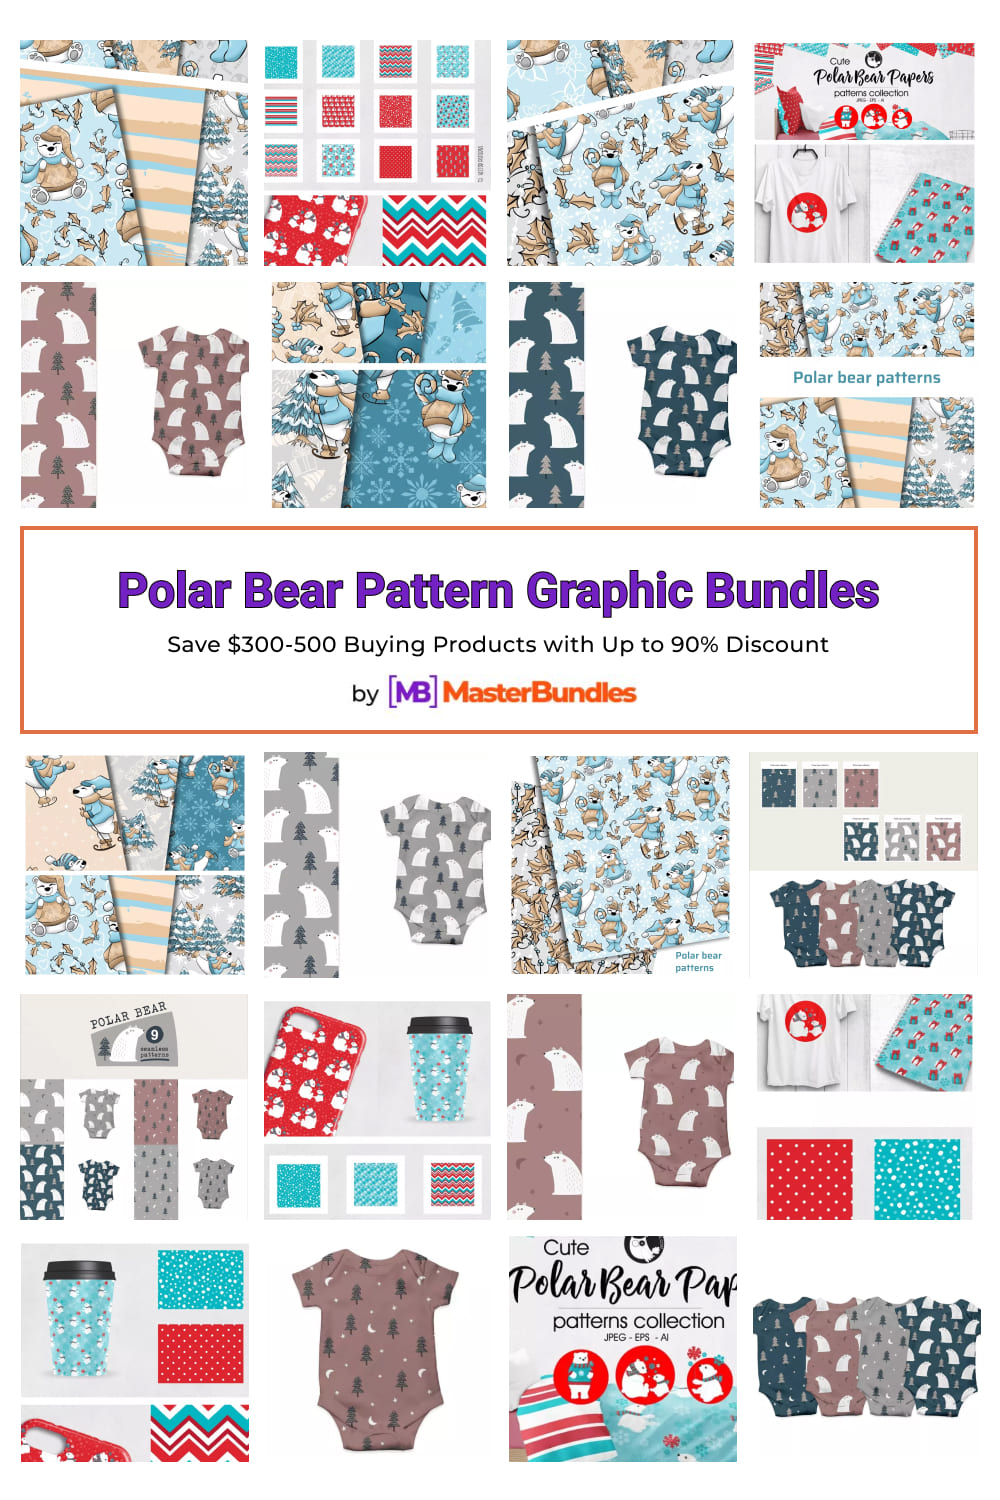 Polar Bear Pattern Graphic Bundles Pinterest image.